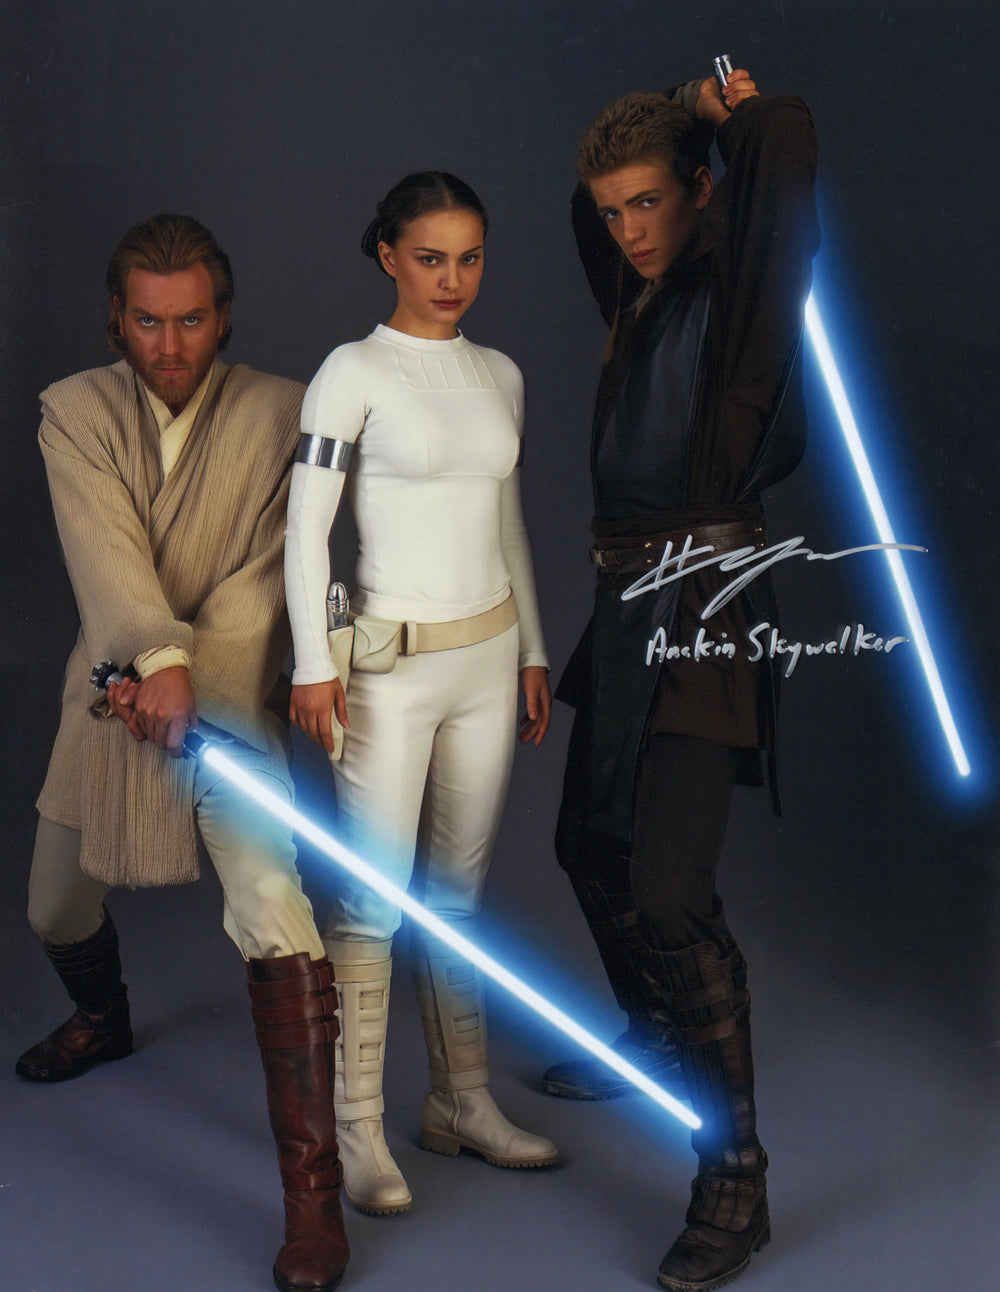 Hayden Christensen as Anakin Skywalker in Star Wars Episode III: Revenge of the Sith (SWAU Authenticated) Signed 16x20 Photo